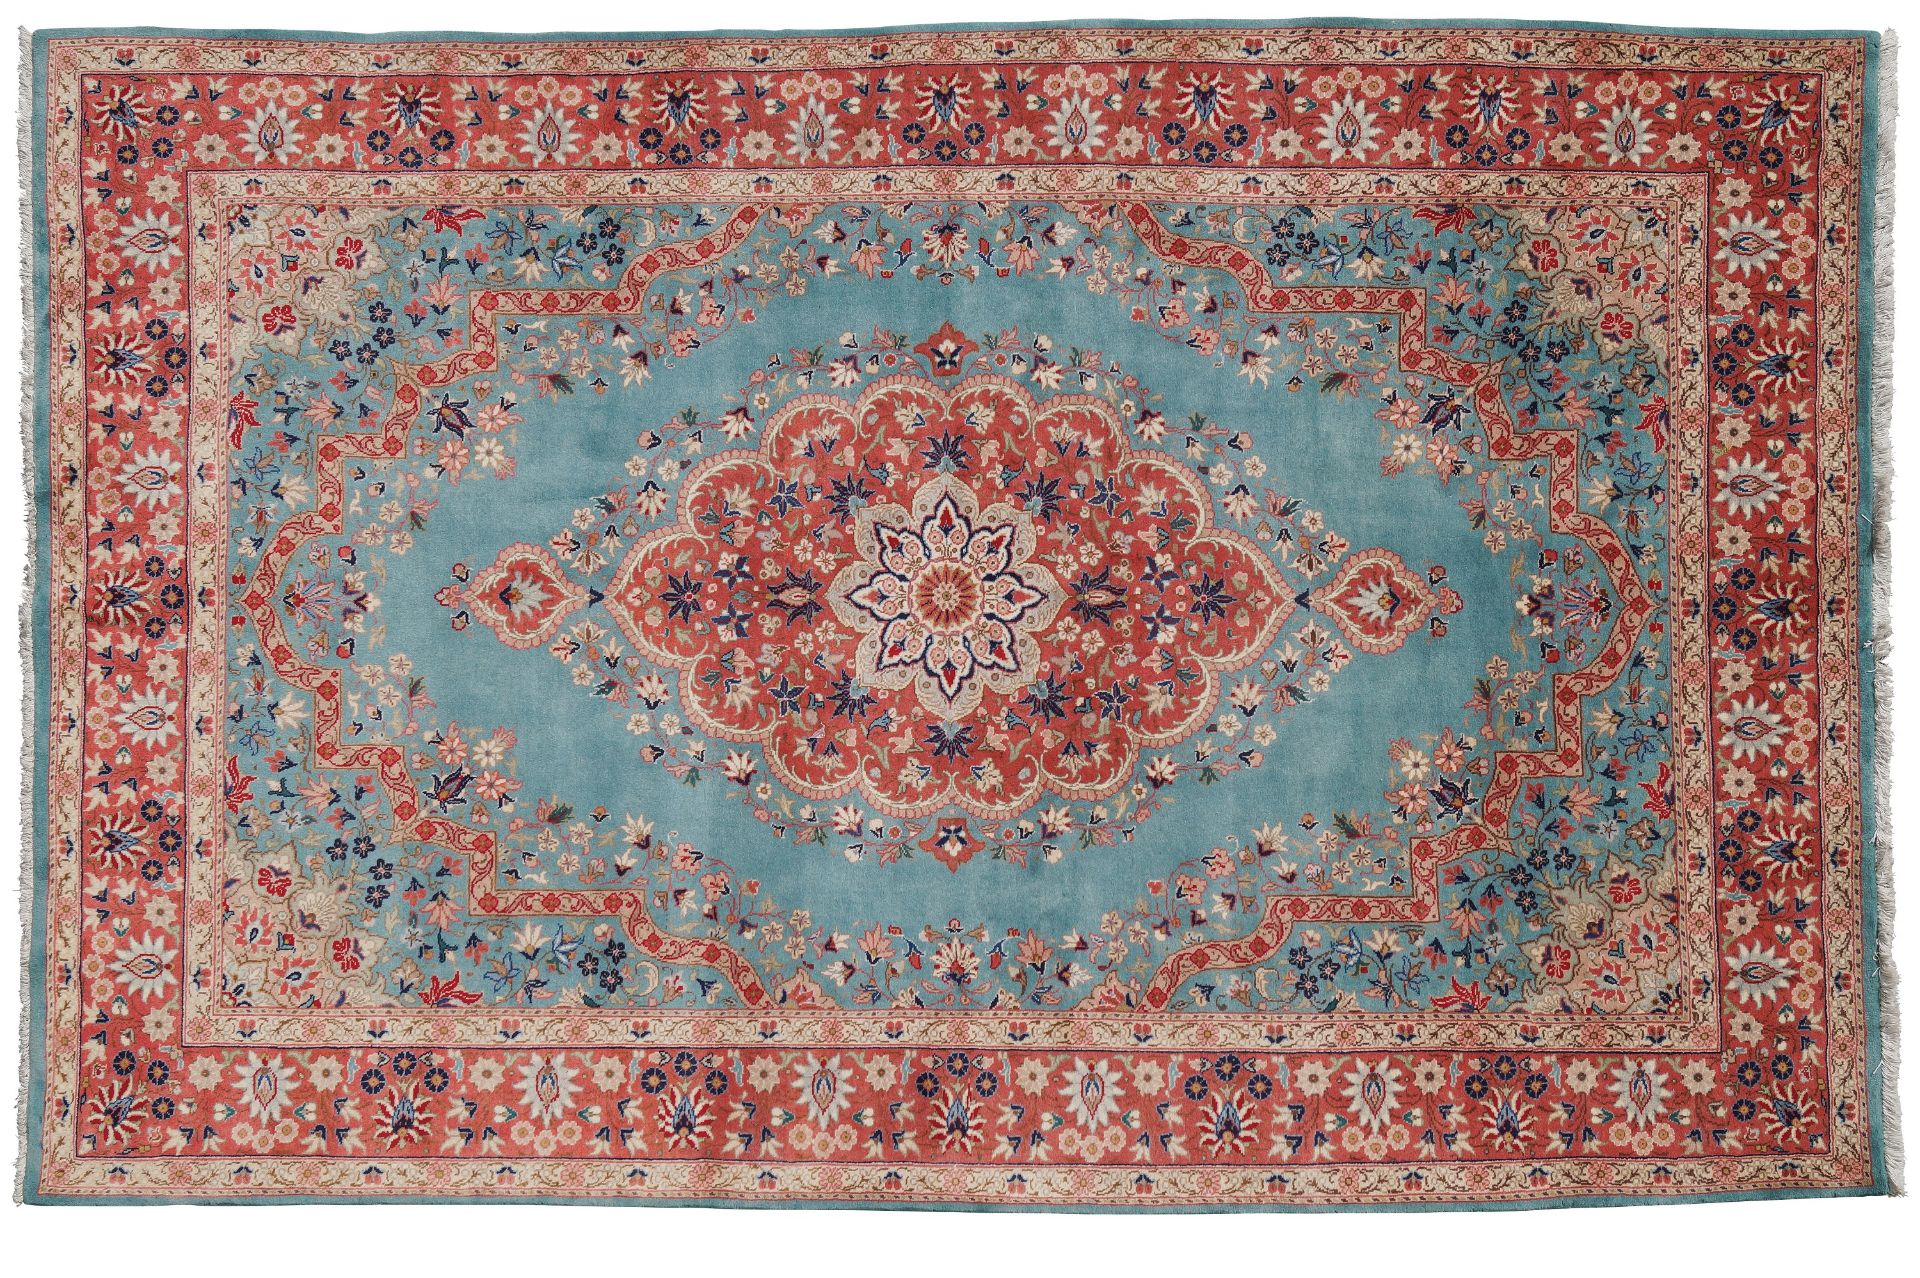 A Yazd carpet